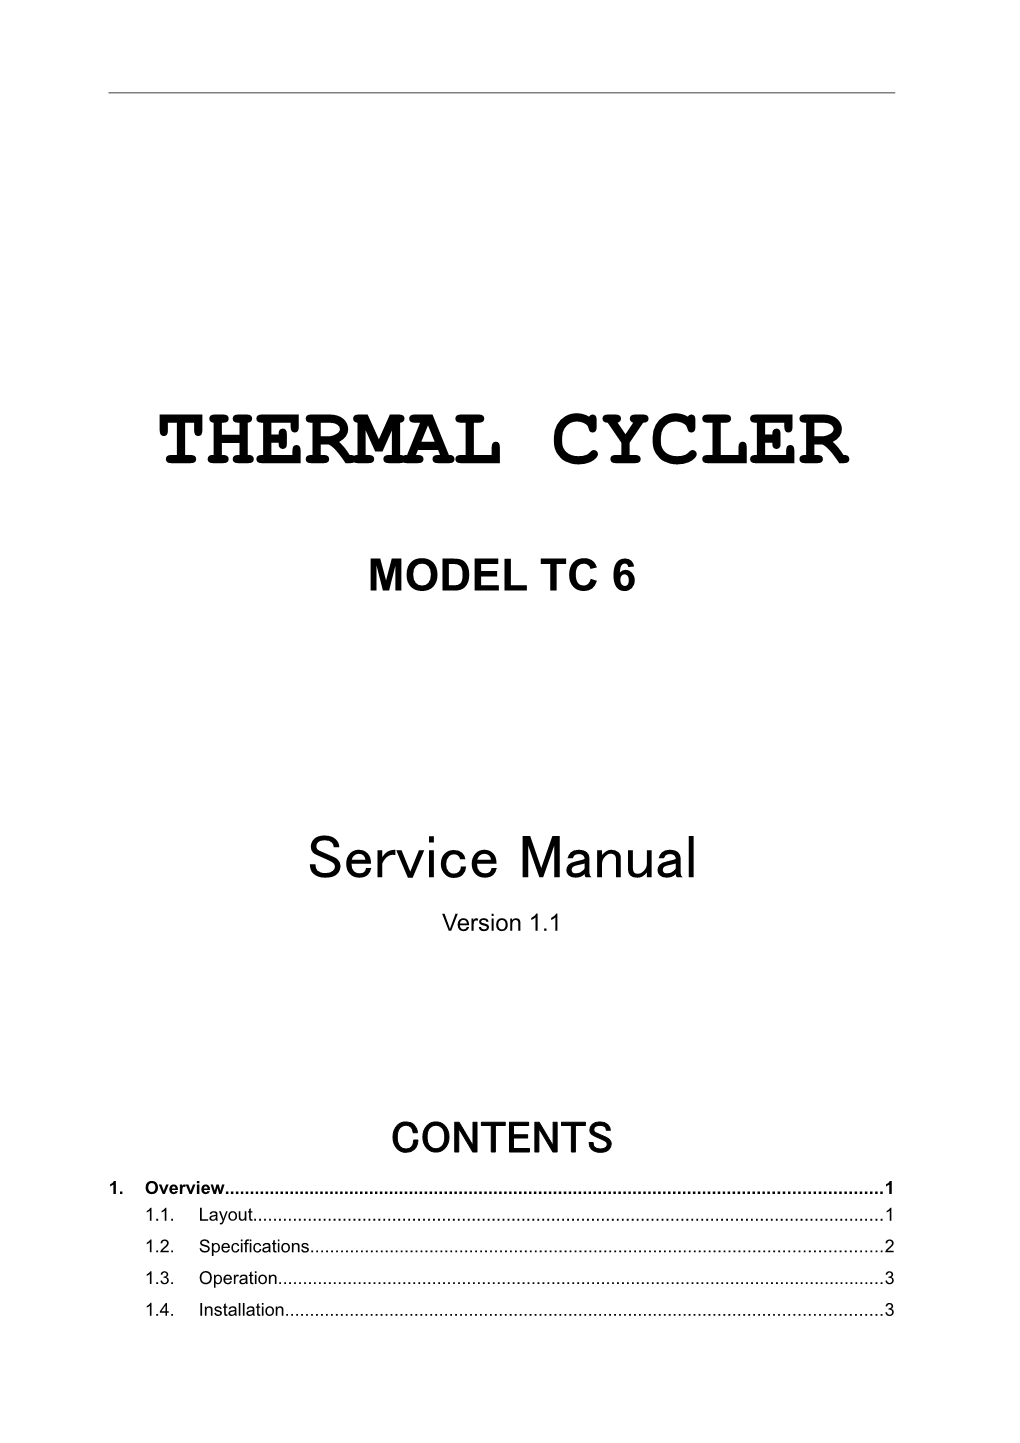 Kaltis International. TC 6 Service Manual